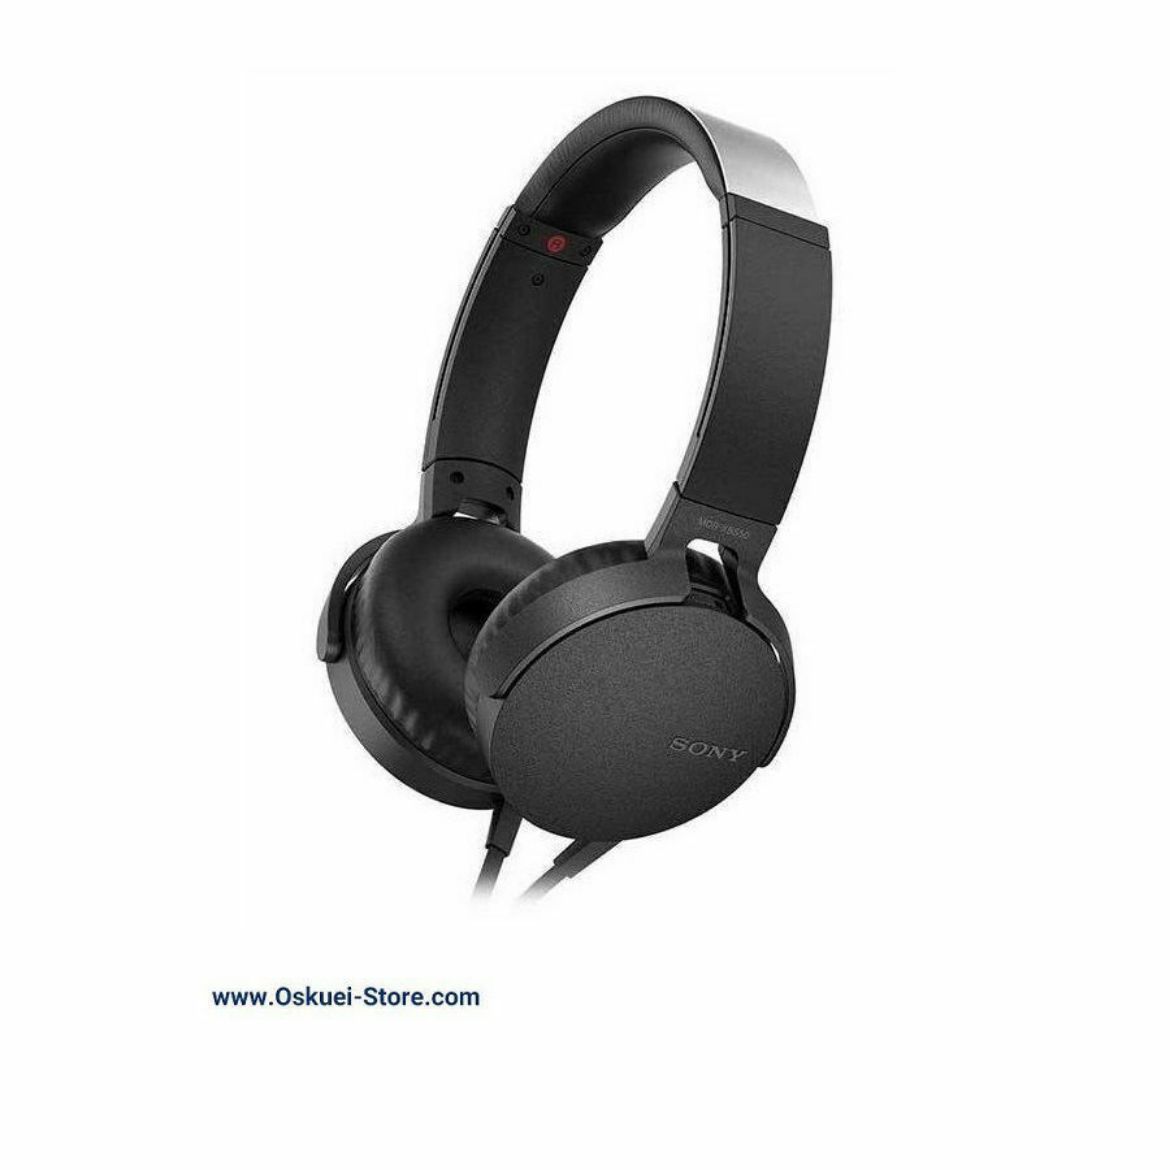 Sony MDR-XB550AP Wired Headphones Black